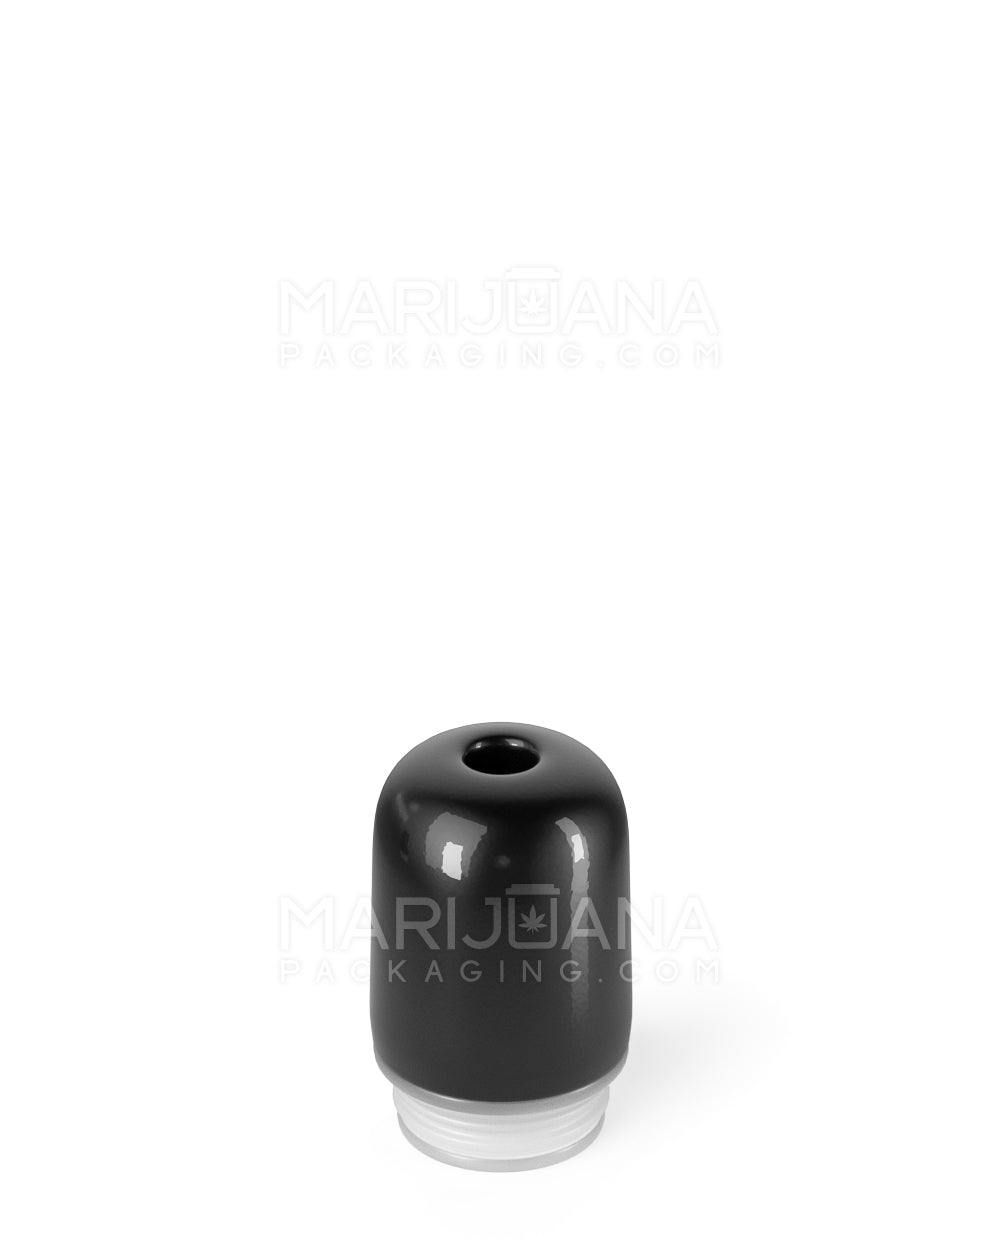 AVD | Round Vape Mouthpiece for Glass Cartridges | Black Ceramic - Eazy Press - 600 Count - 3